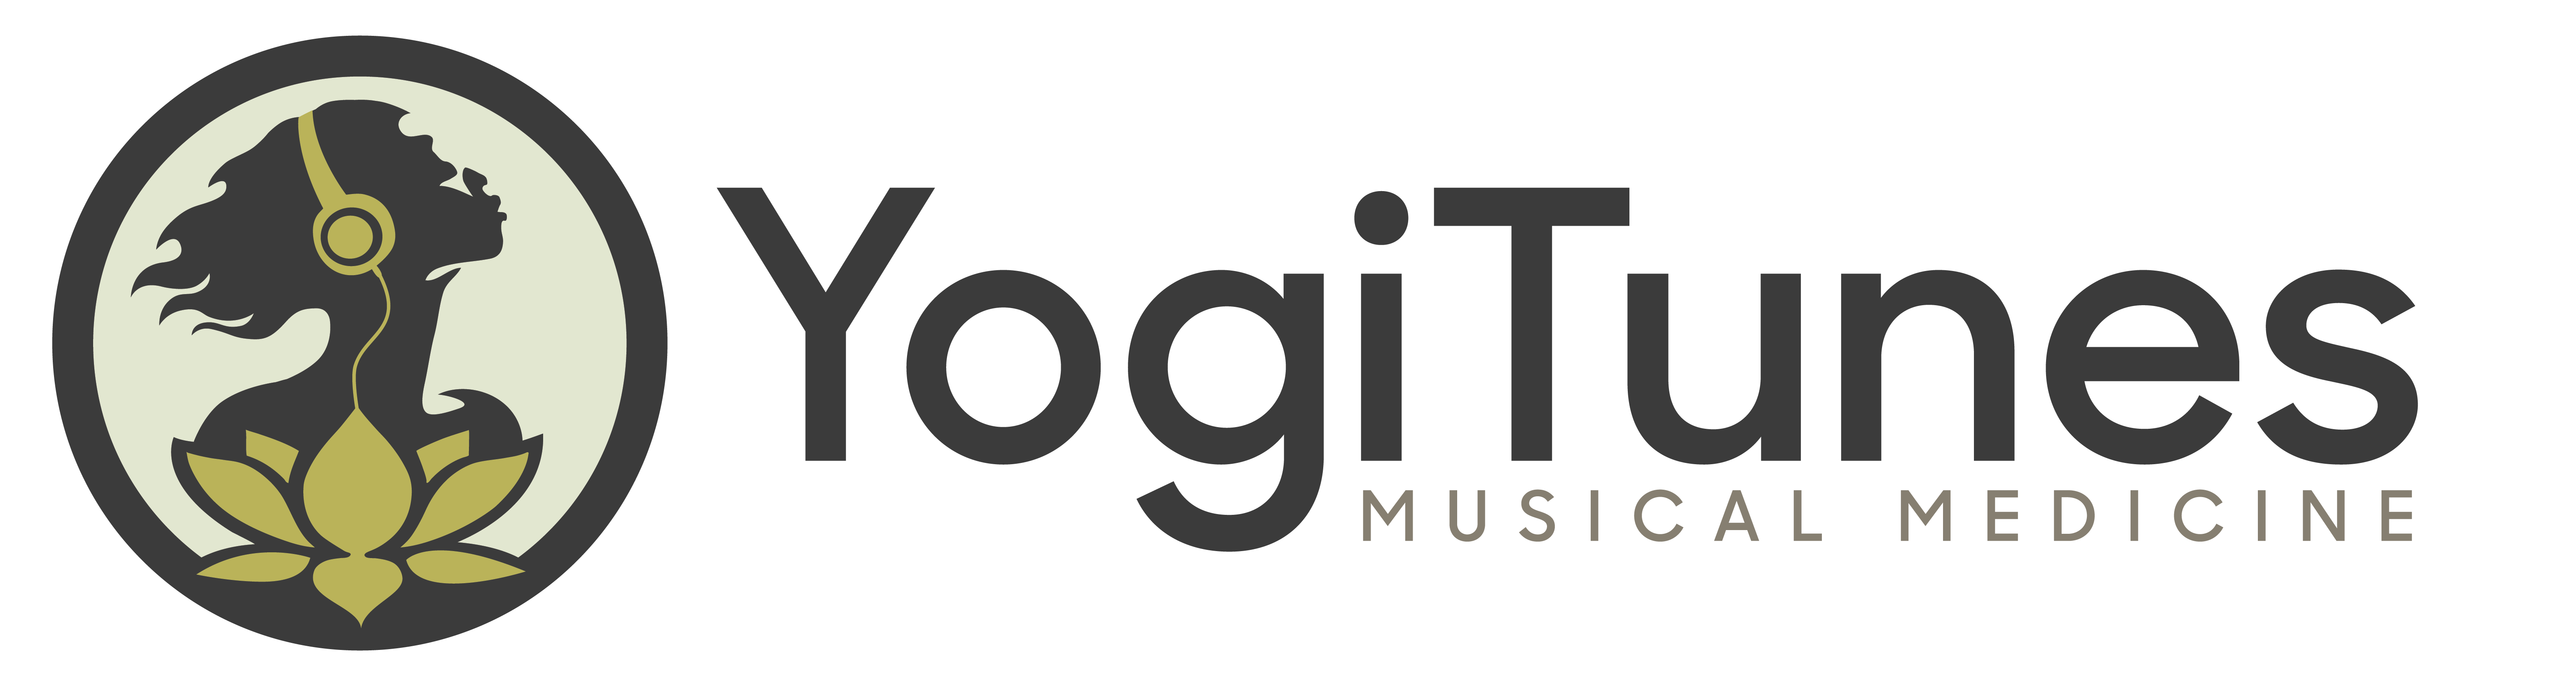 YogiTunes Logo